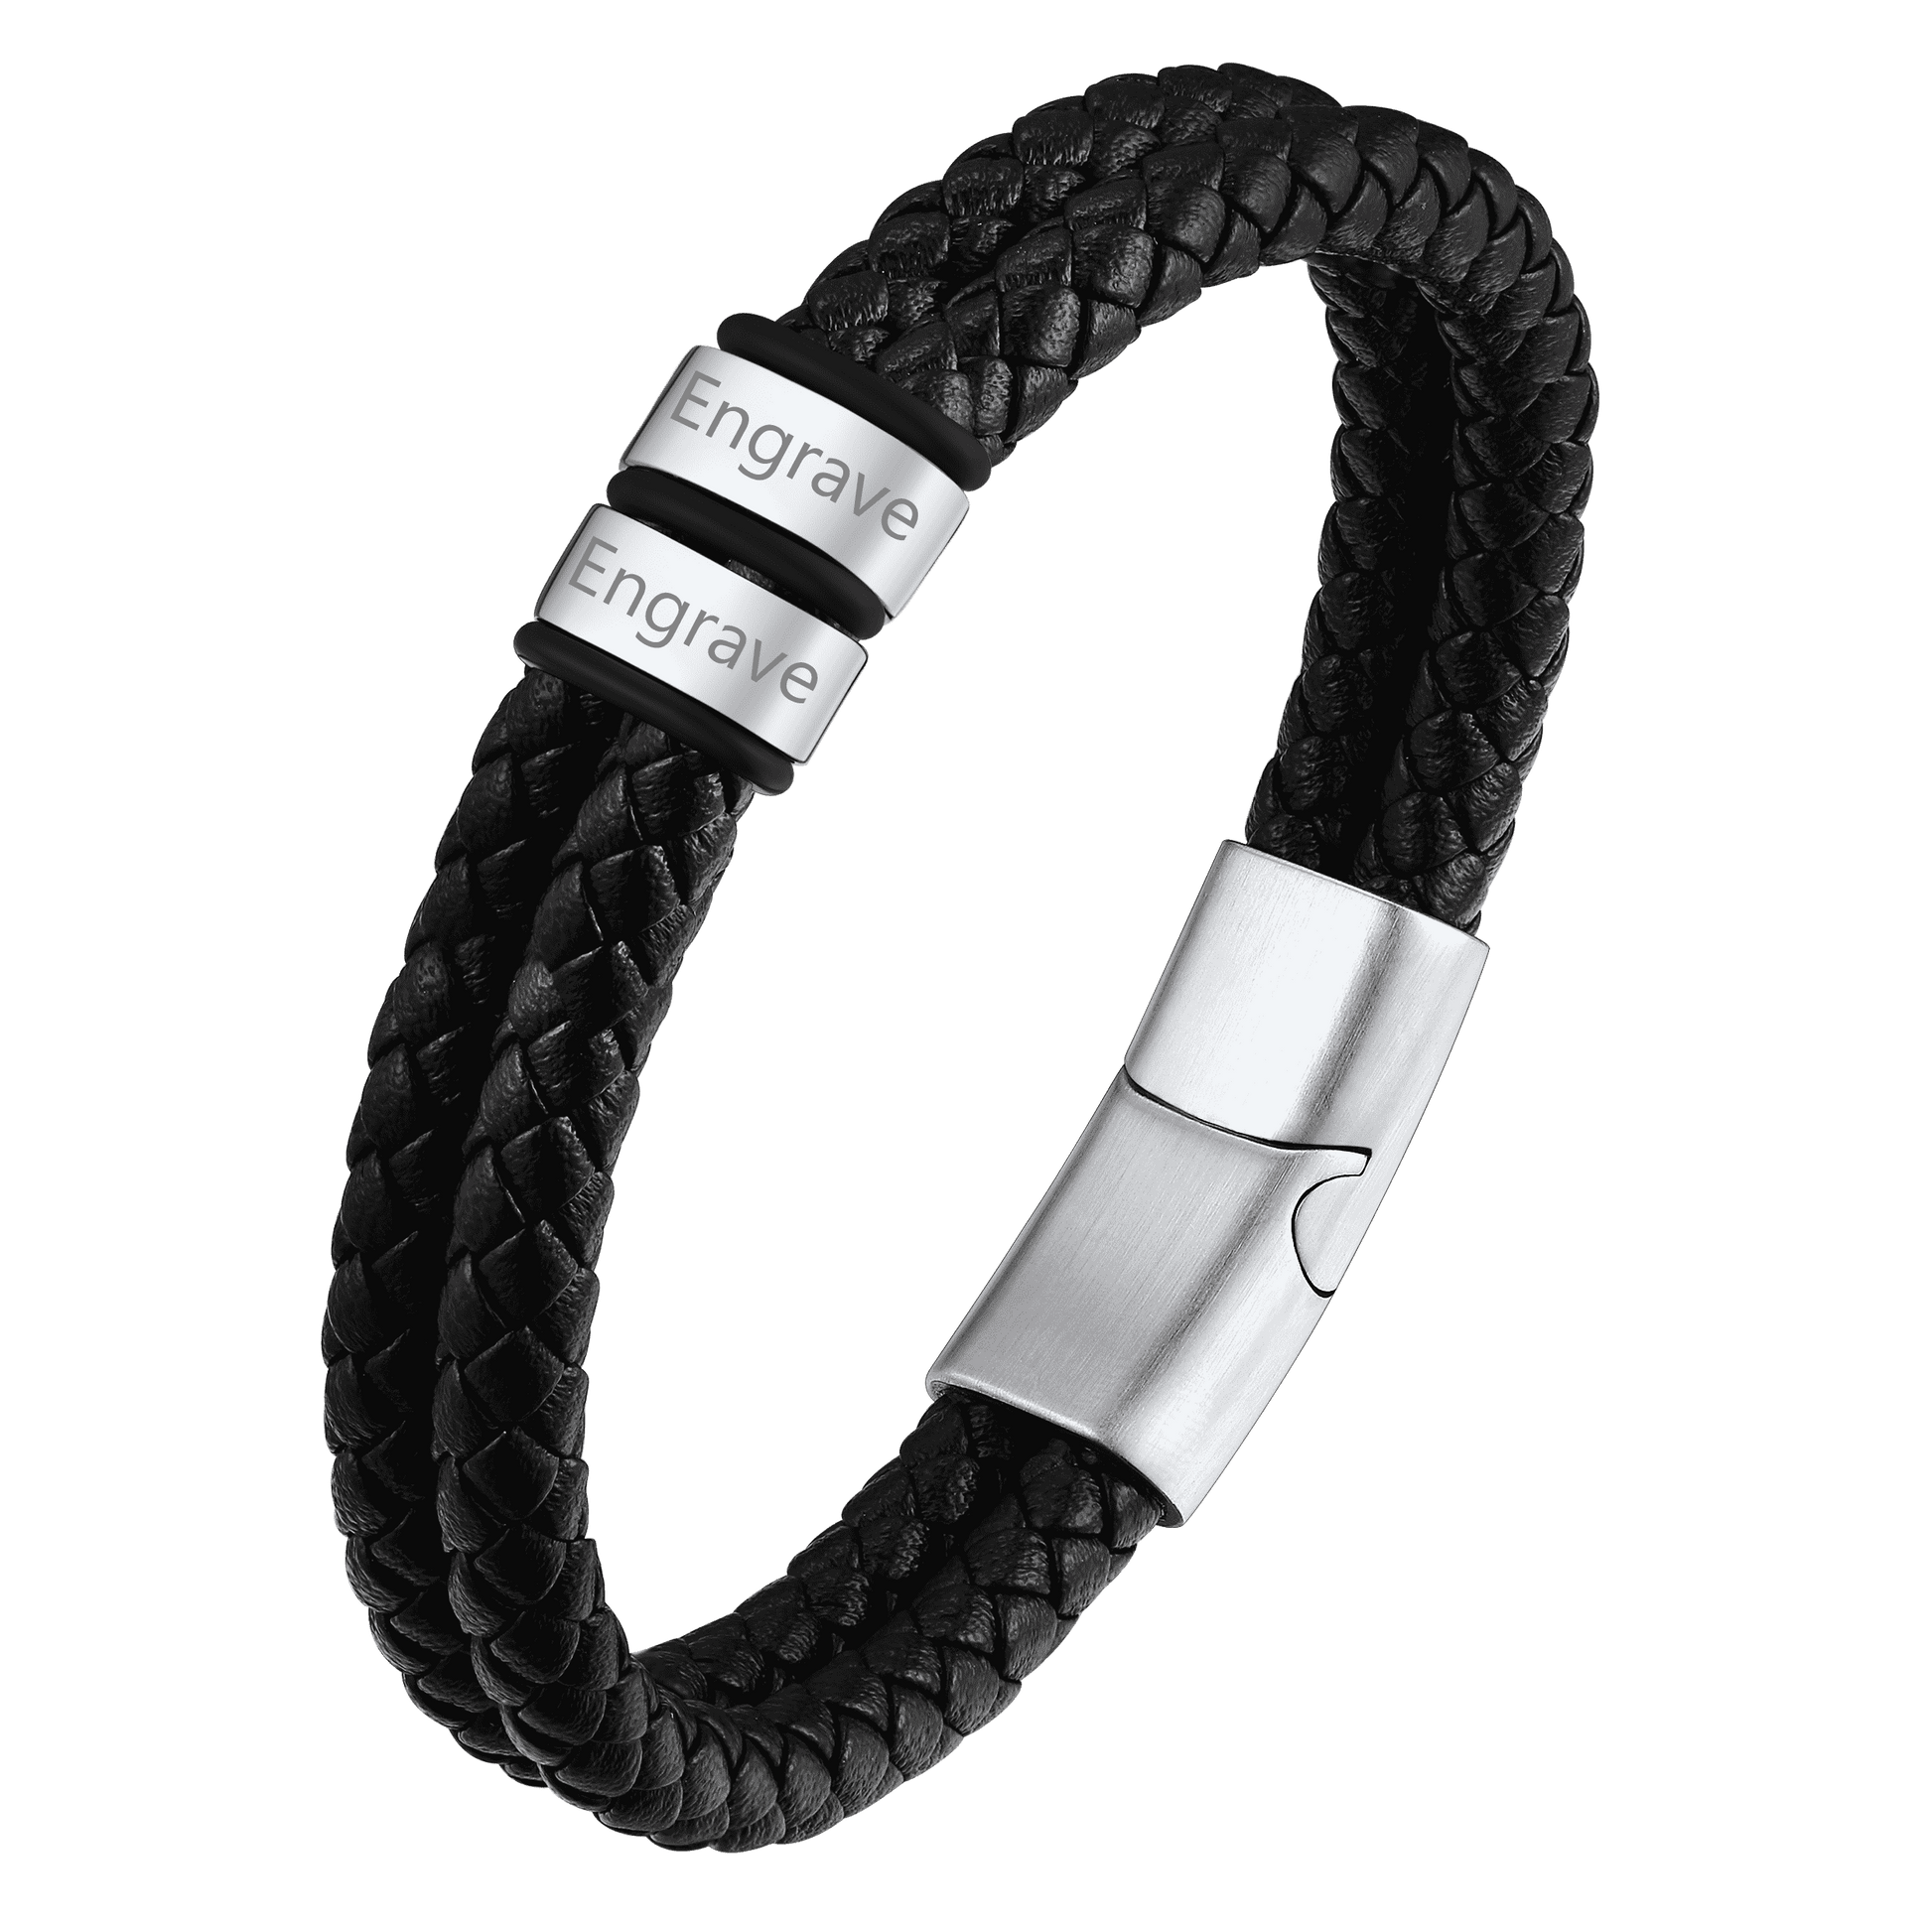 FaithHeart Personalized For Unisex Leather Custom Beaded Braided Bracelet FaithHeart